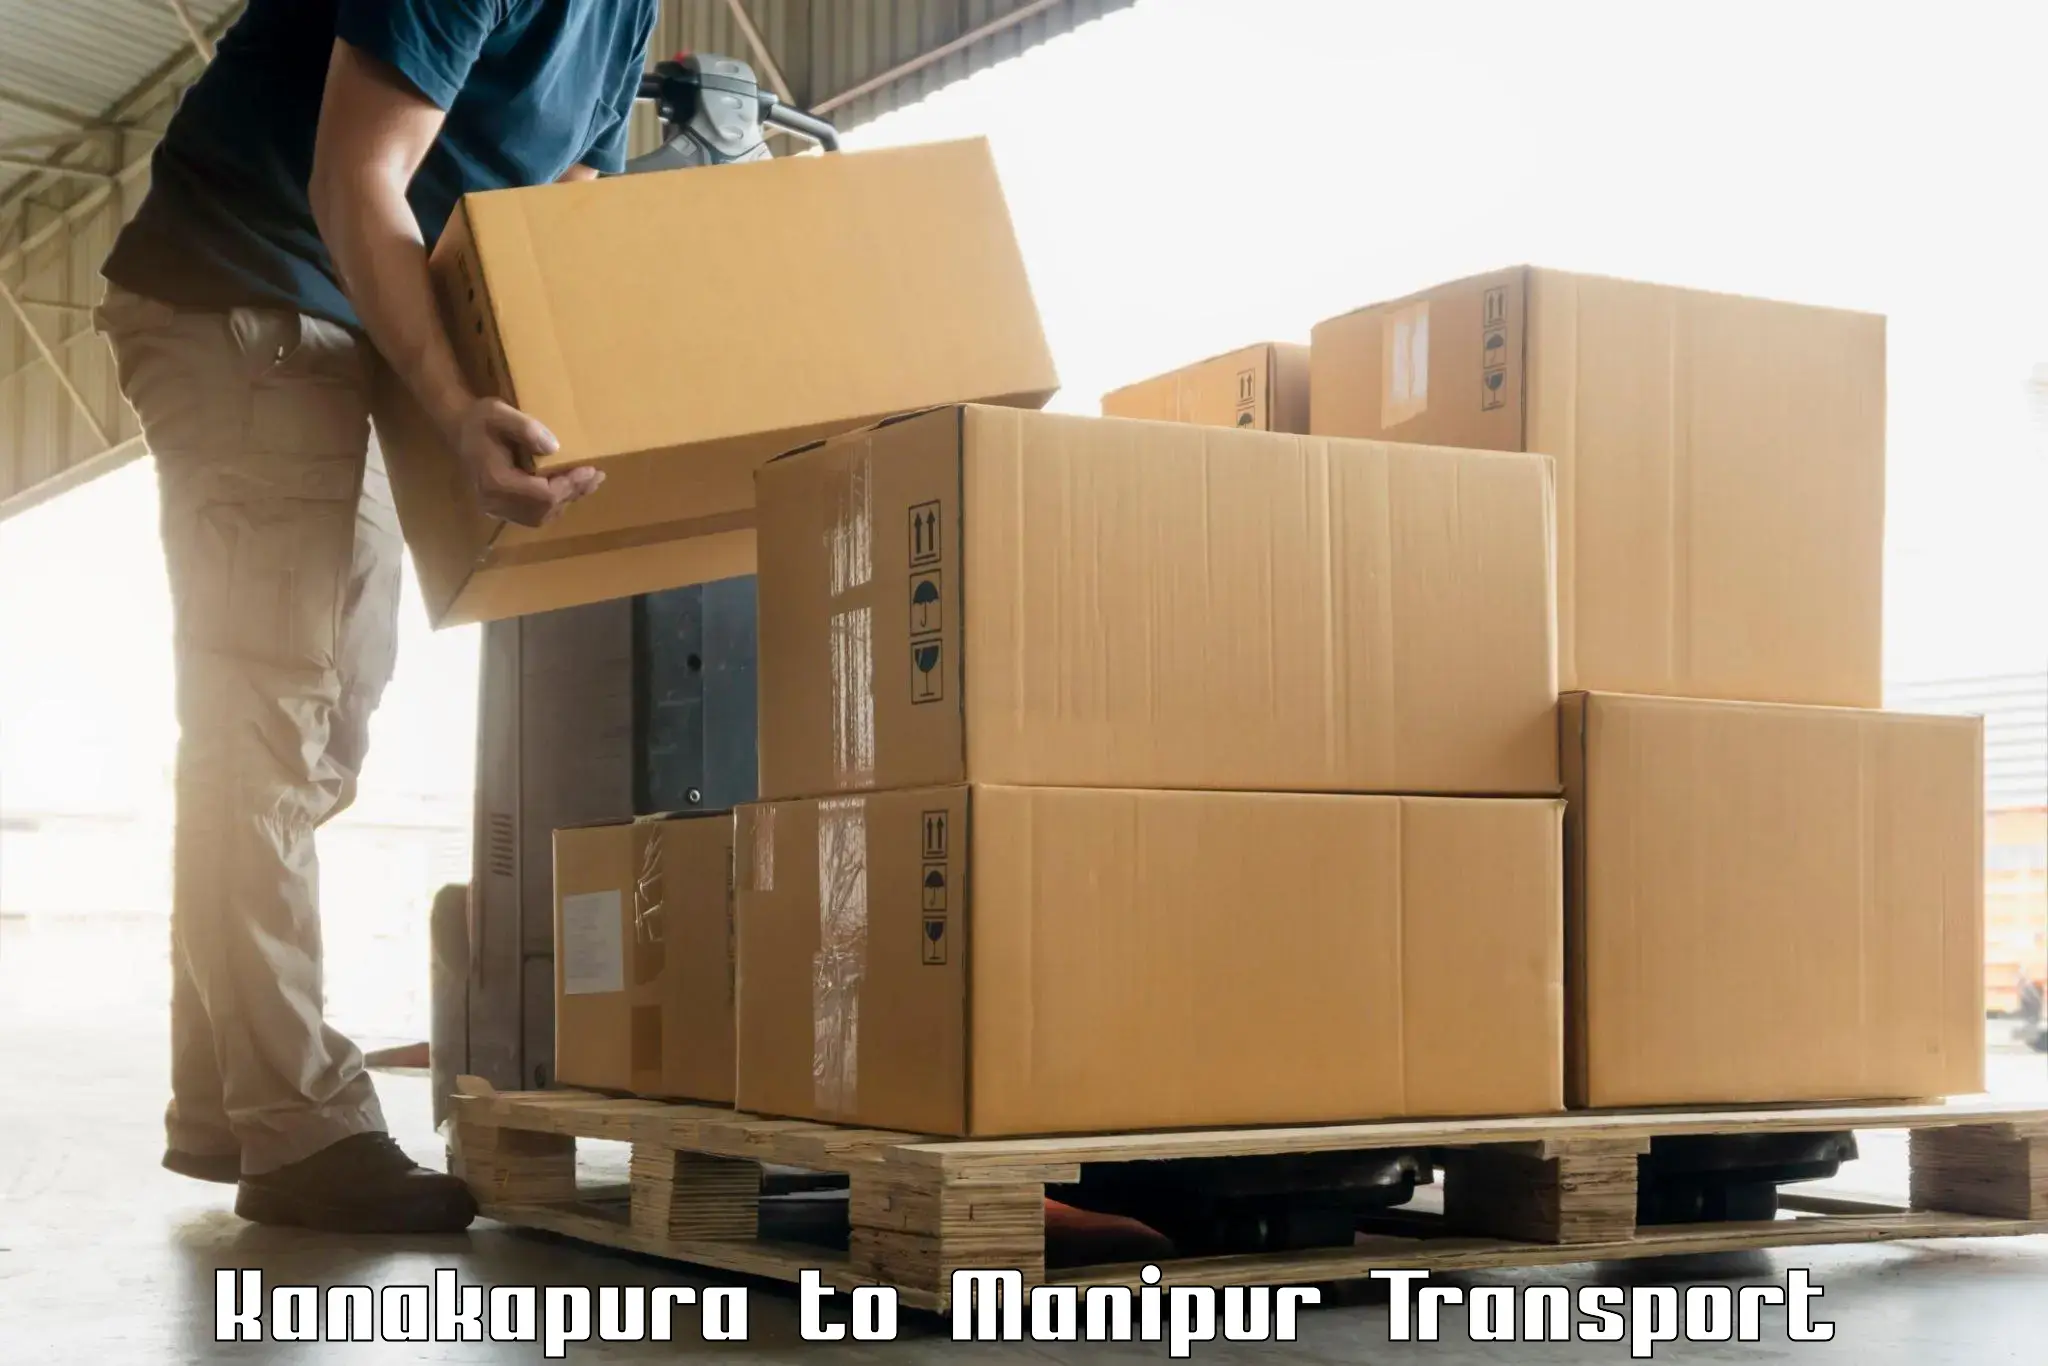 Shipping partner Kanakapura to Manipur